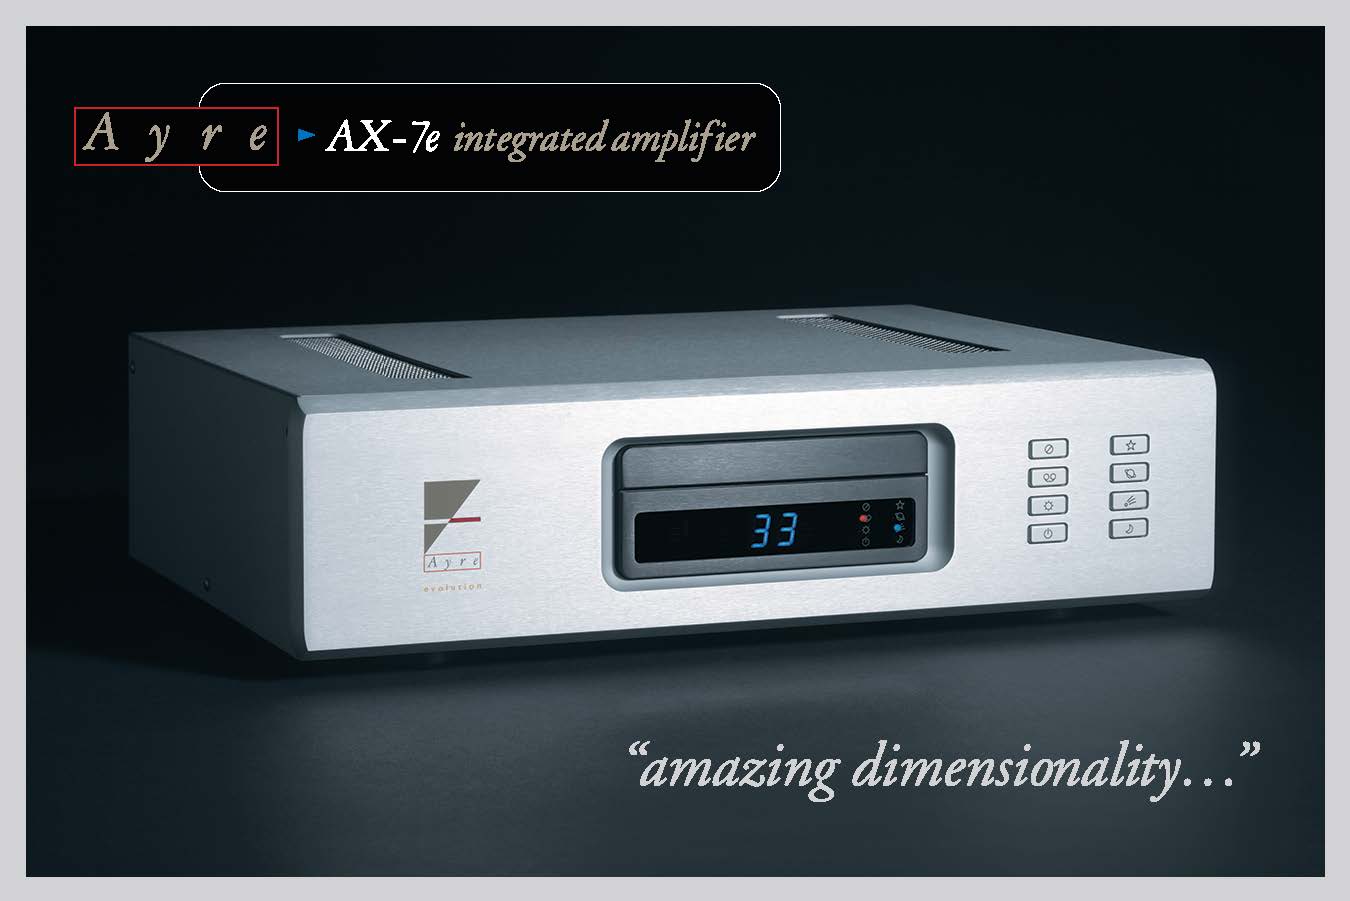 Ayre Ax-7e Integrated Amplifier Literature - Norman Audio